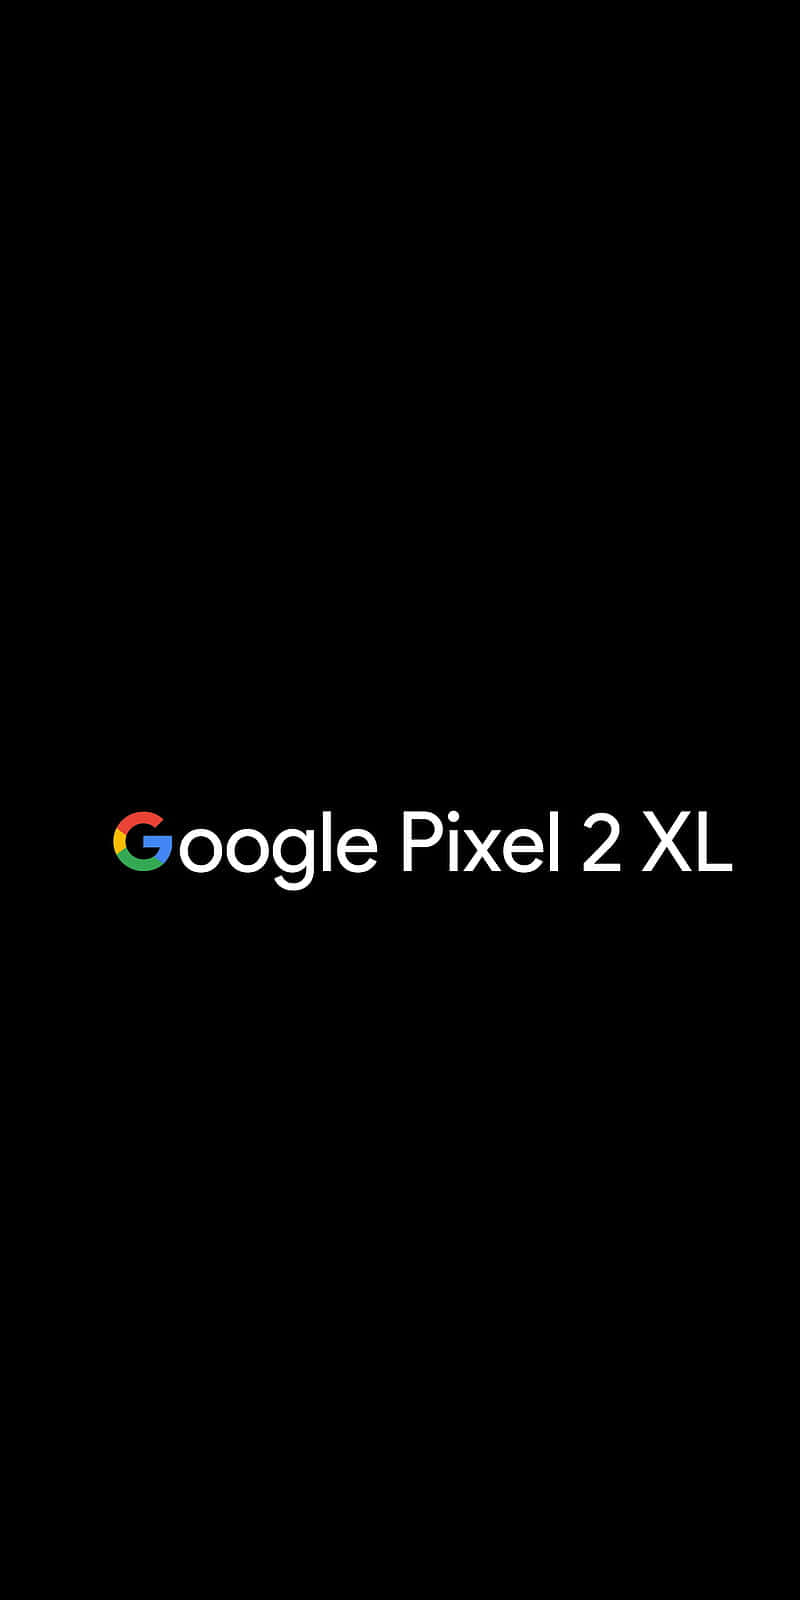 Google Pixel 800 X 1600 Wallpaper